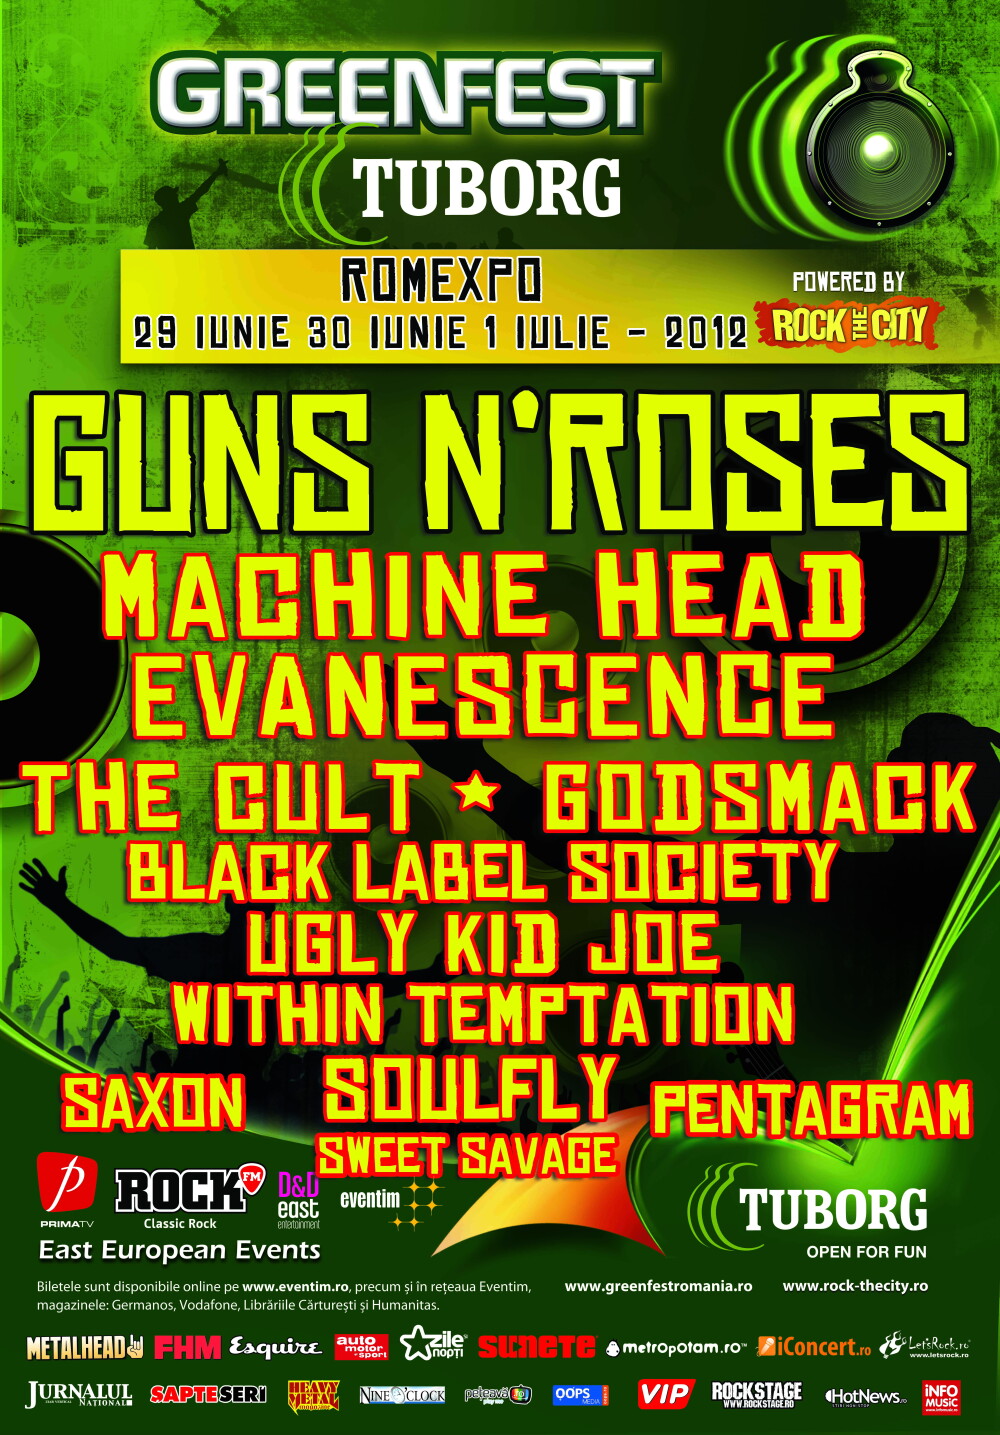 Guns'n Roses, Machine Head, Soulfly, Godsmack - Tuborg Green Fest 2012, PROGRAM COMPLET - Imaginea 4